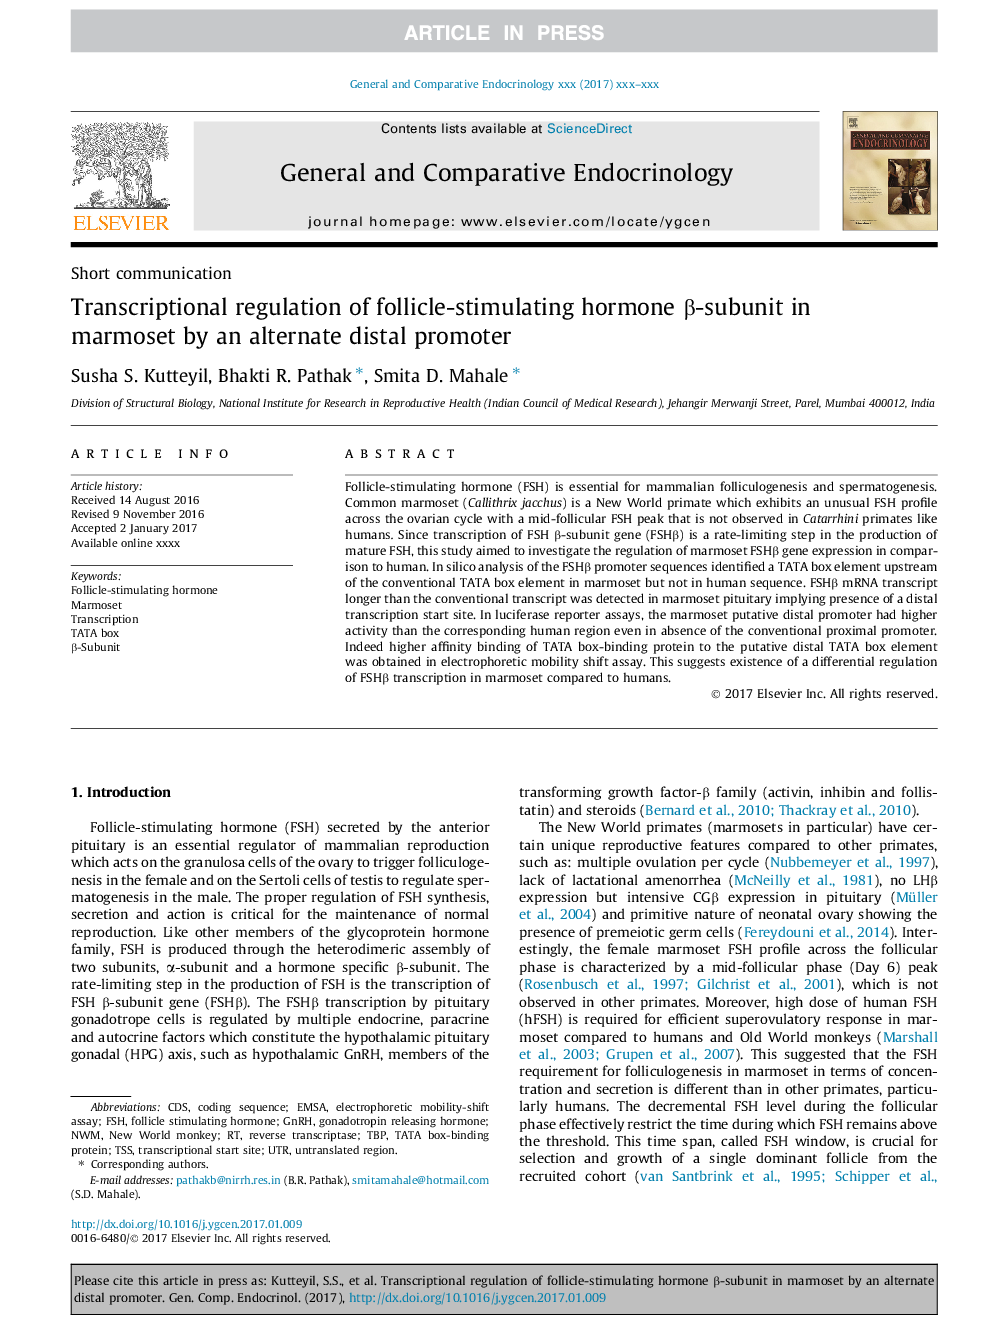 Transcriptional regulation of follicle-stimulating hormone Î²-subunit in marmoset by an alternate distal promoter